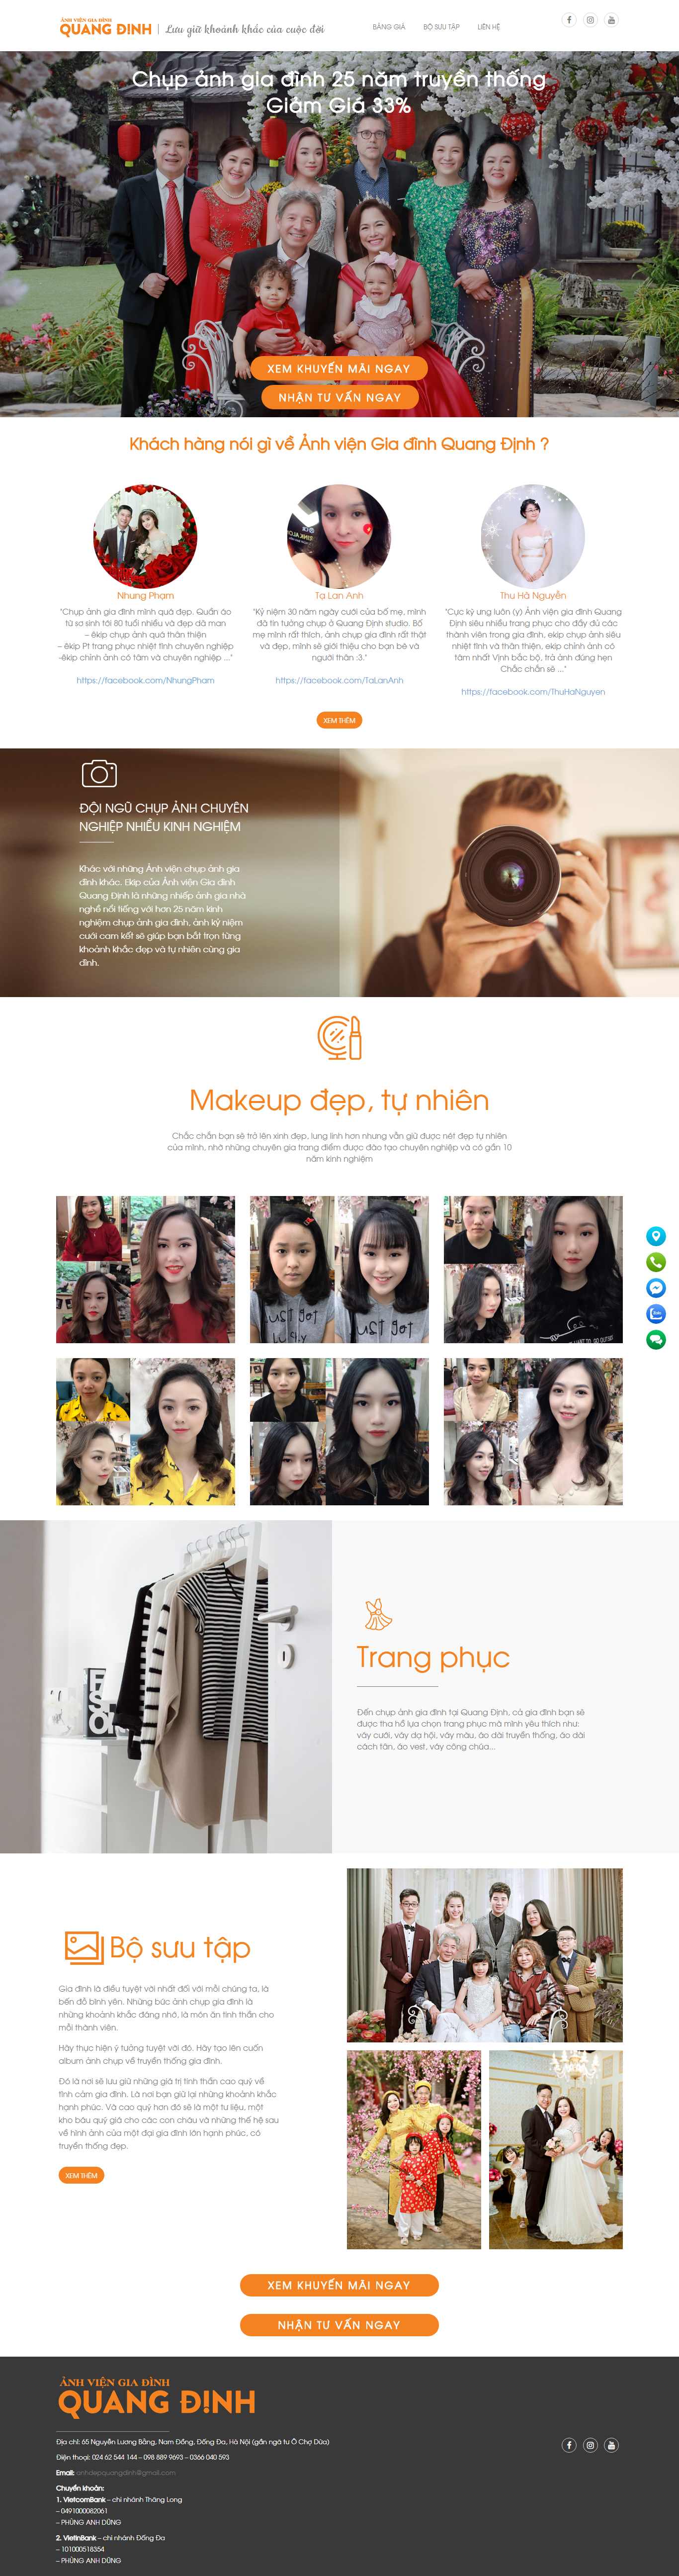 Thiết kế Website ảnh viện - anhvienquangdinh.vn